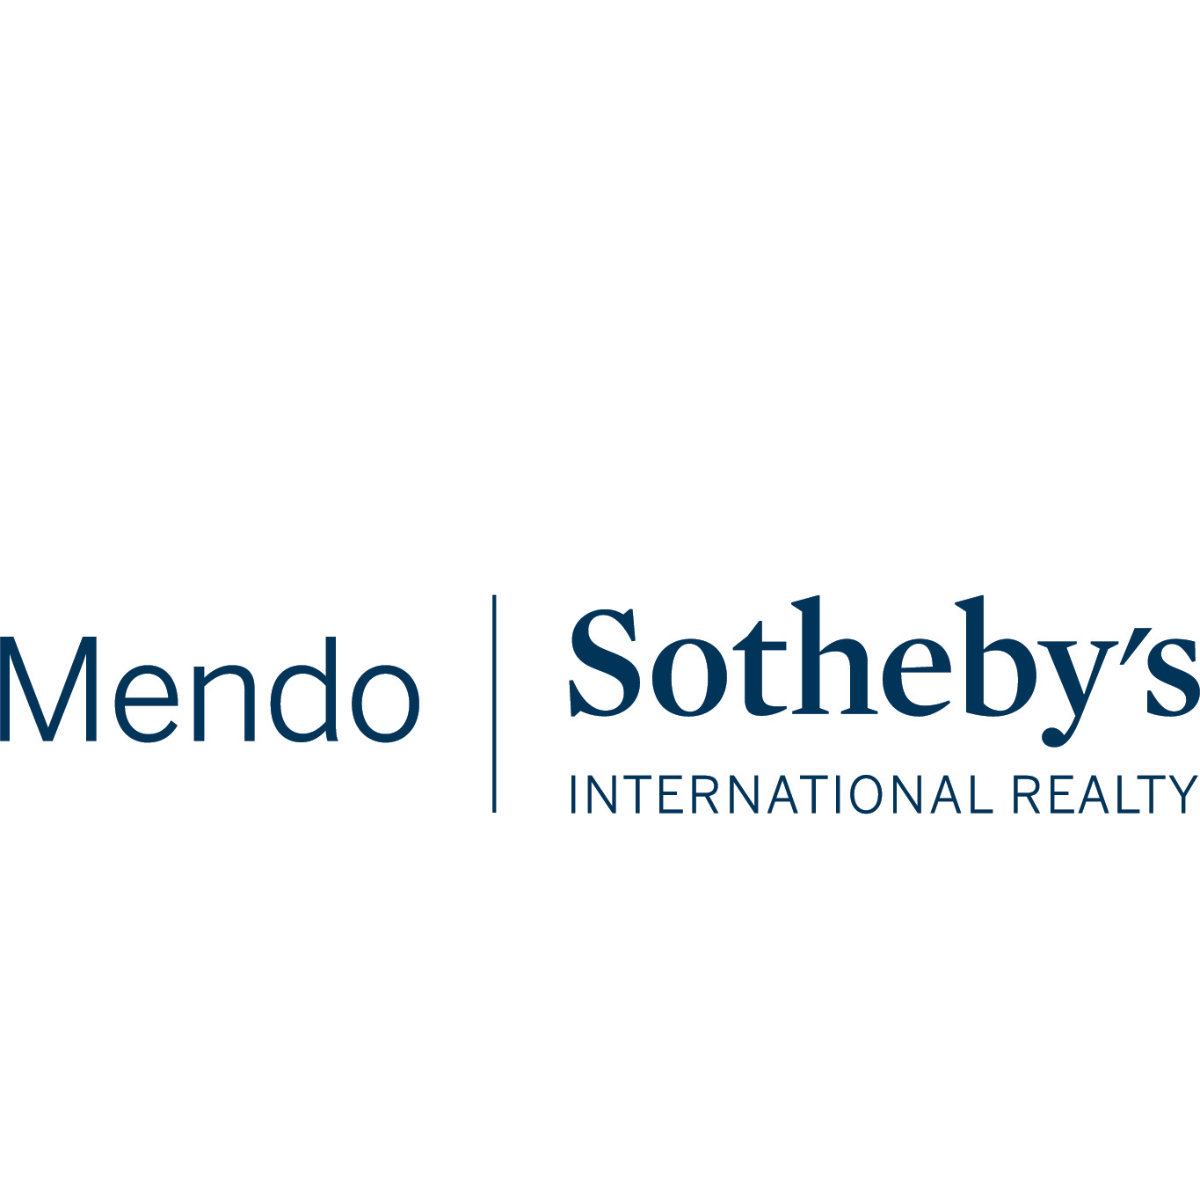 Mendo Sotheby's International Realty